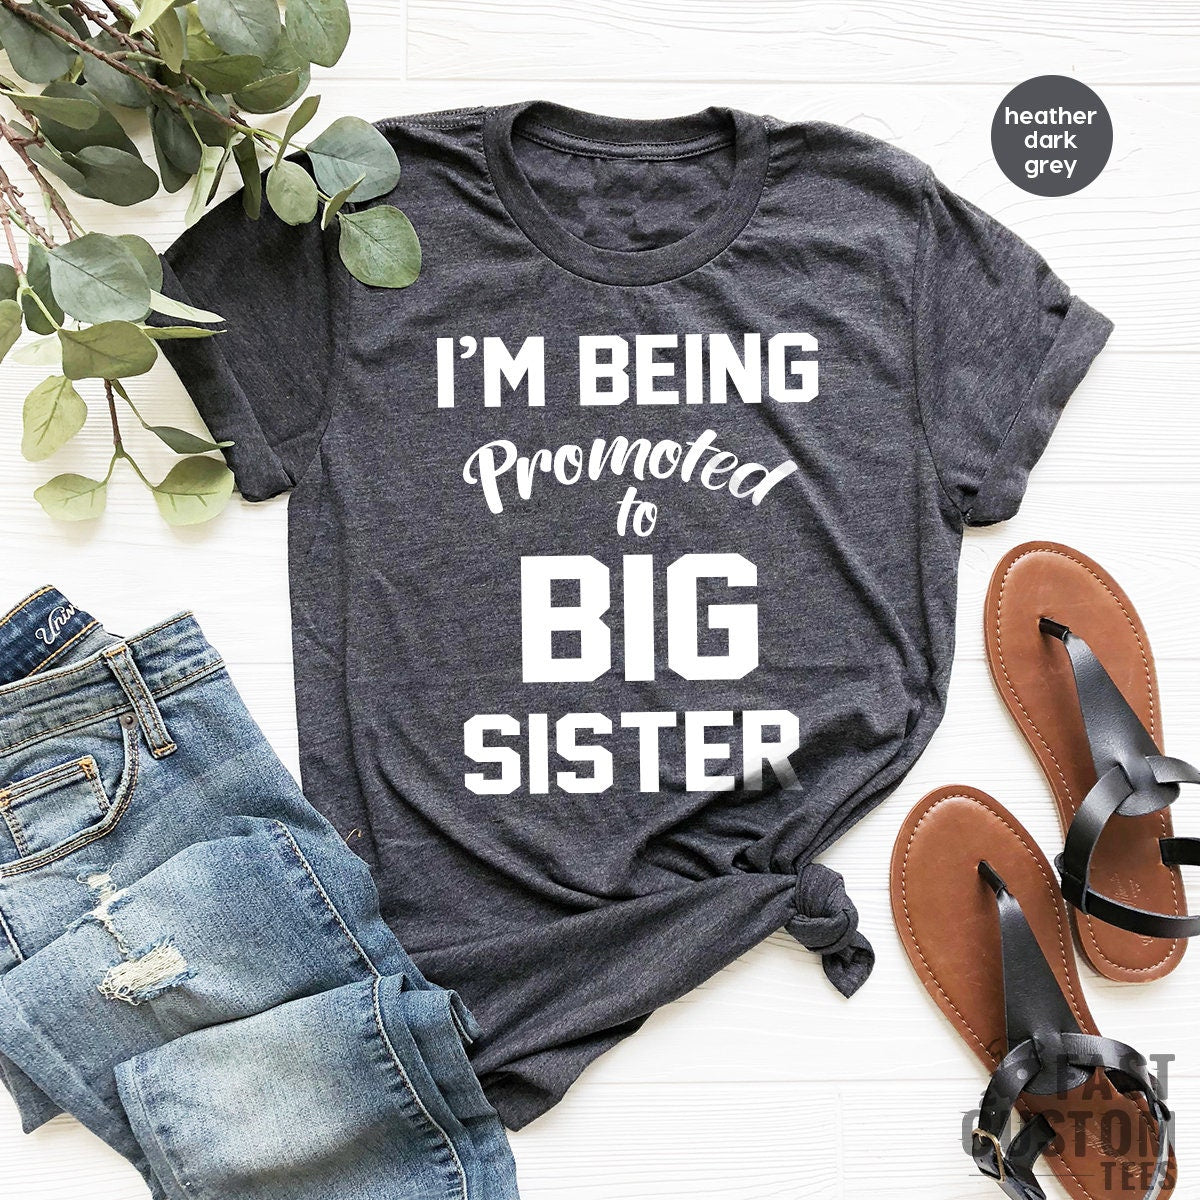 Sister T Shirt,big Sister TShirt,Little Sisters Shirt, I'd Walk Through Fire for You Sister Shirt,big Sister Gift,Gifts for Sister